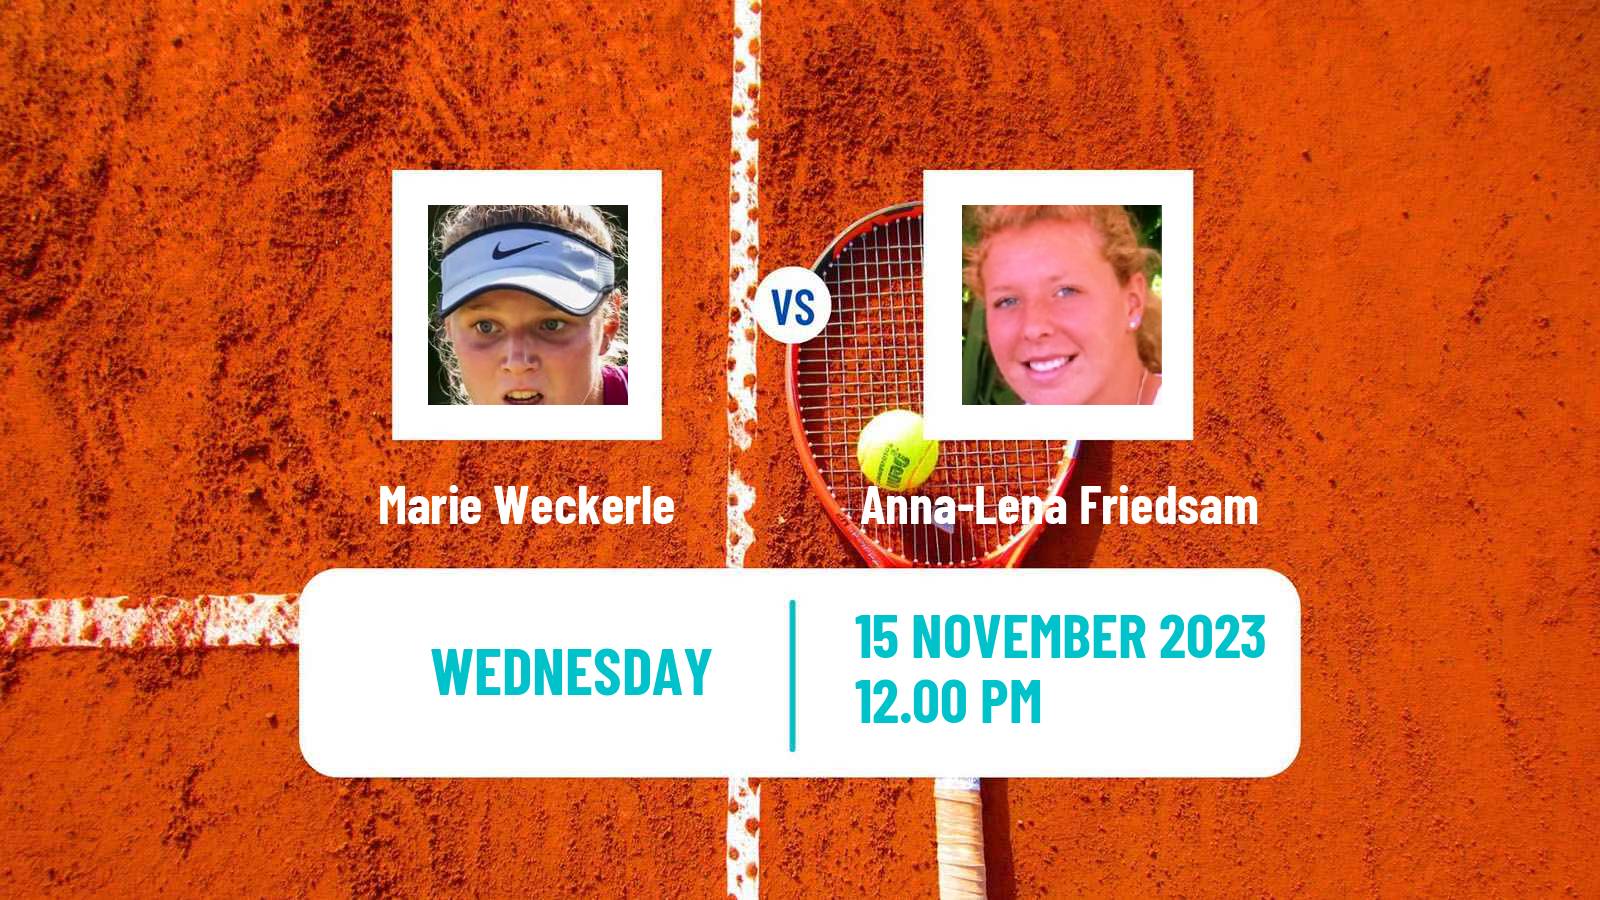 Tennis ITF W40 Petange Women Marie Weckerle - Anna-Lena Friedsam